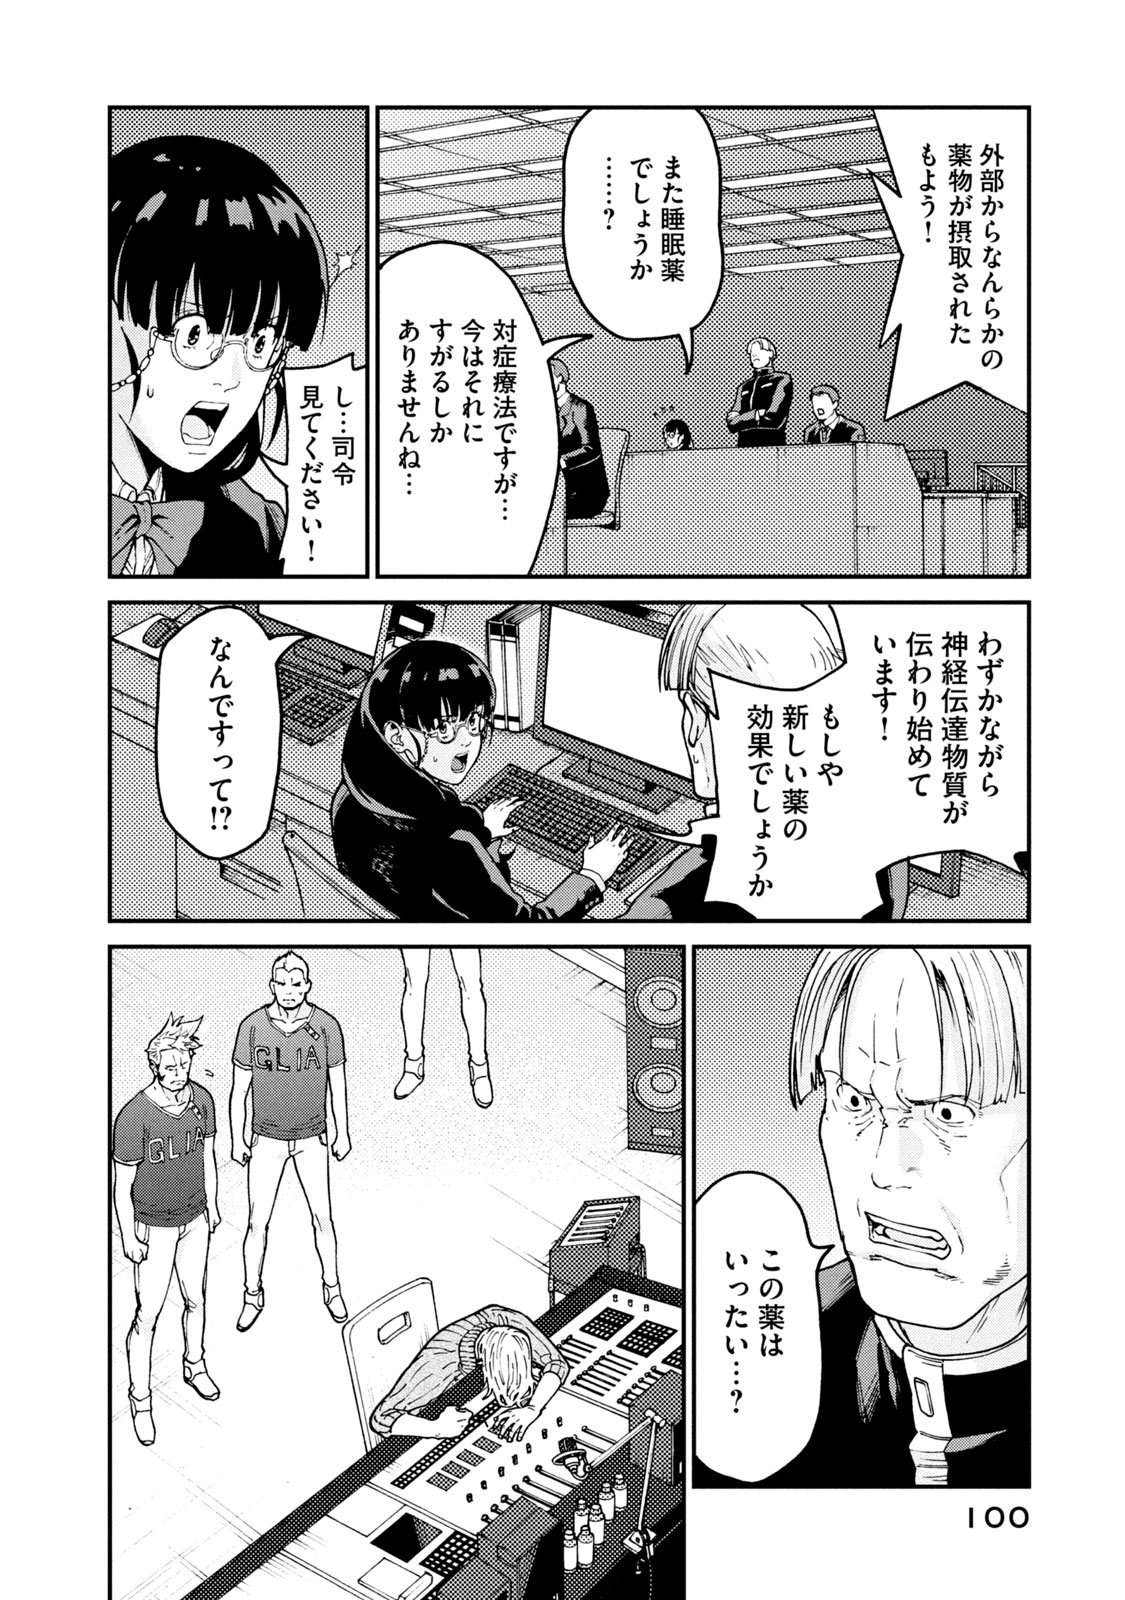 Hataraku Saibou BLACK - Chapter 35 - Page 8